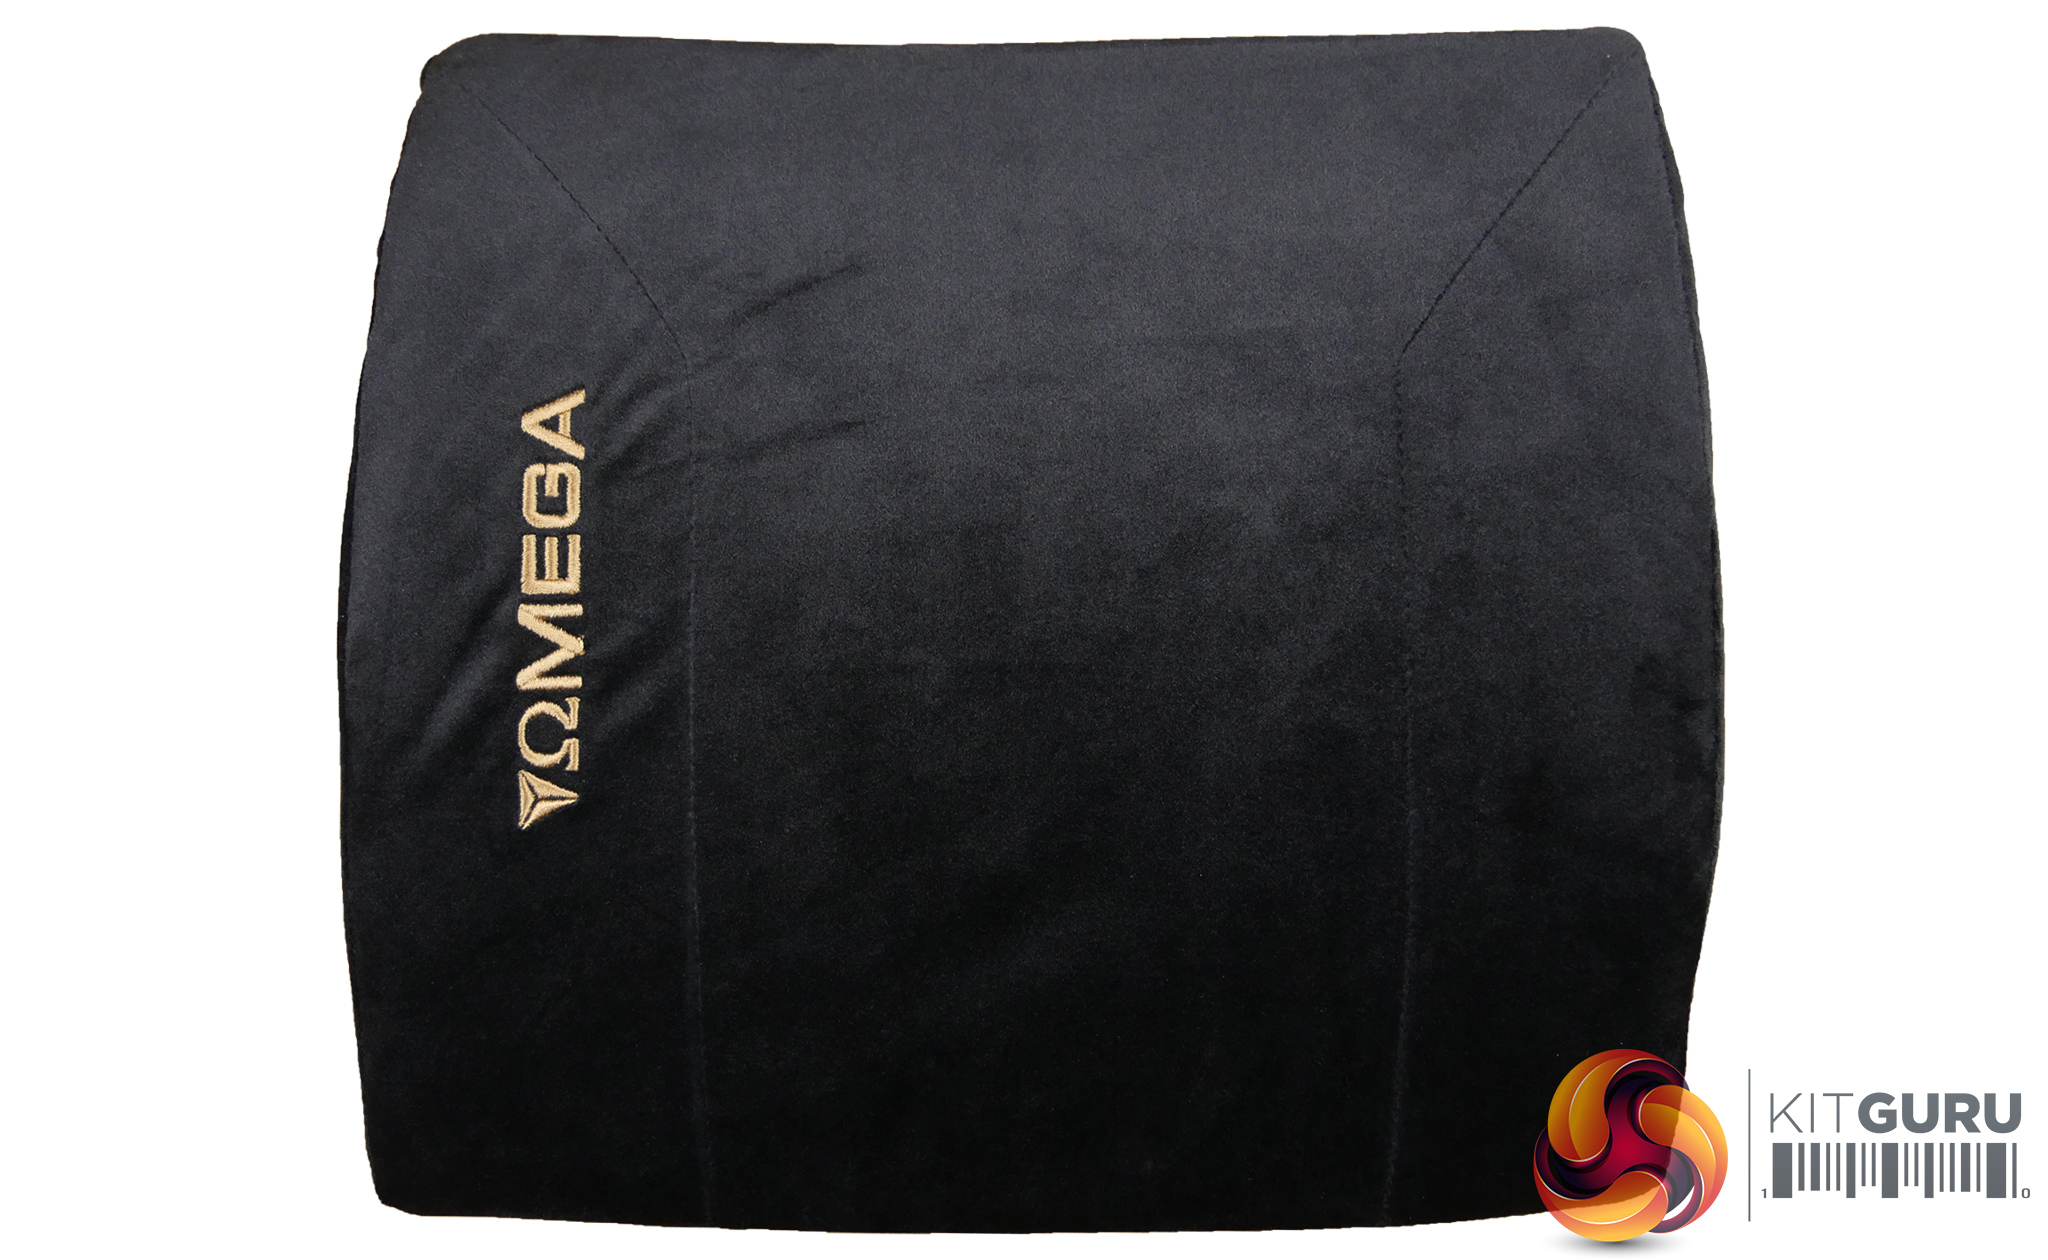 Secretlab - Our brand new velour memory foam lumbar pillows are